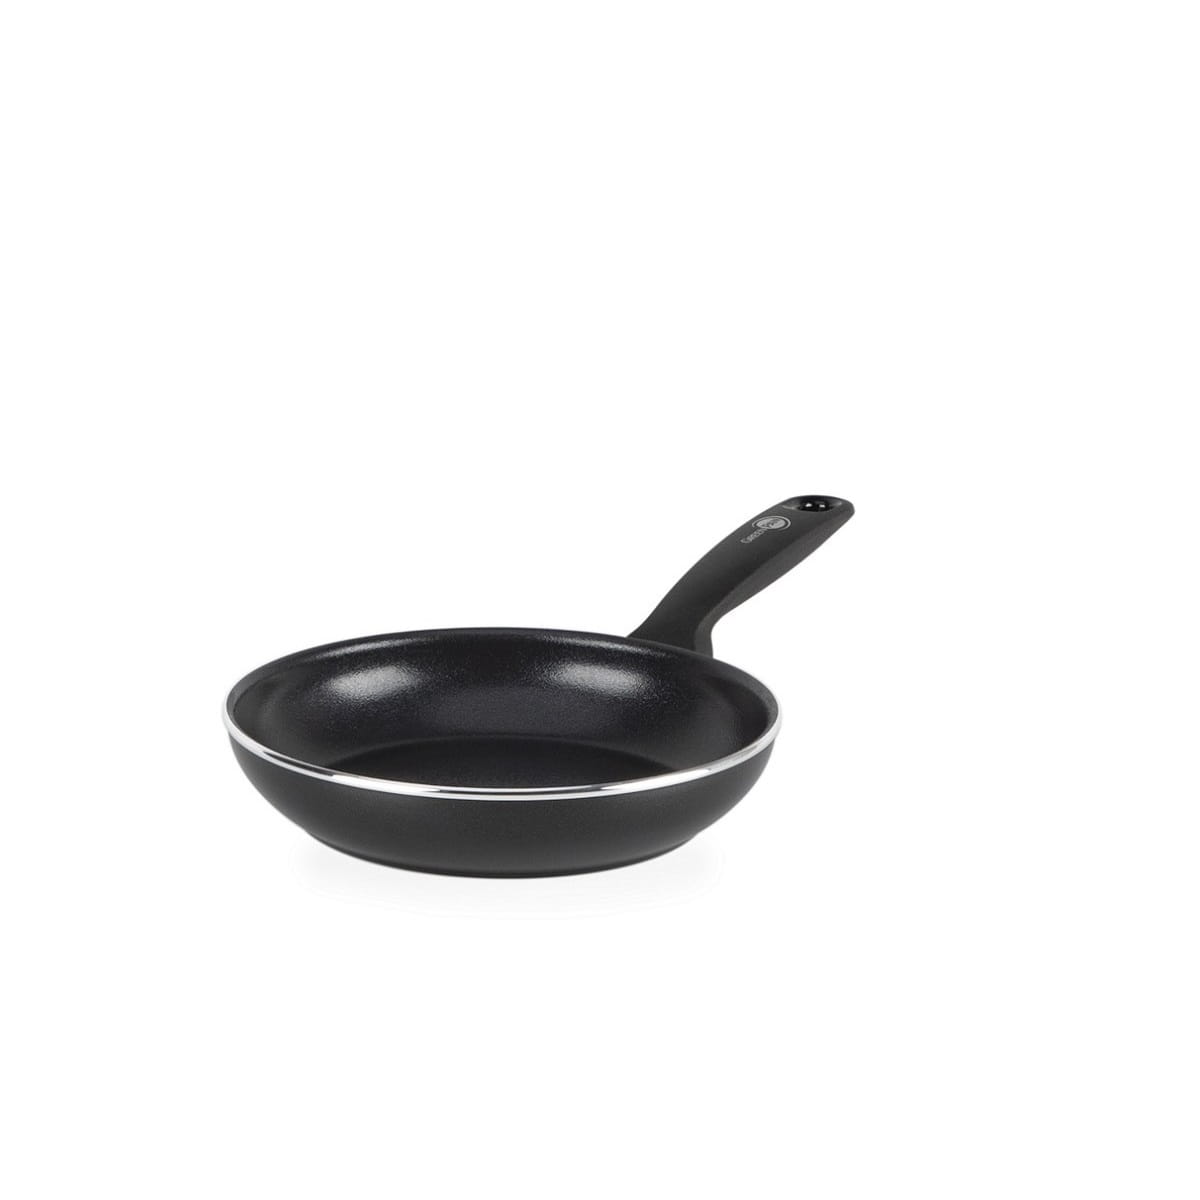 CC001525-001 - Andorra Frying Pan, Black - 20cm - Product Image 1